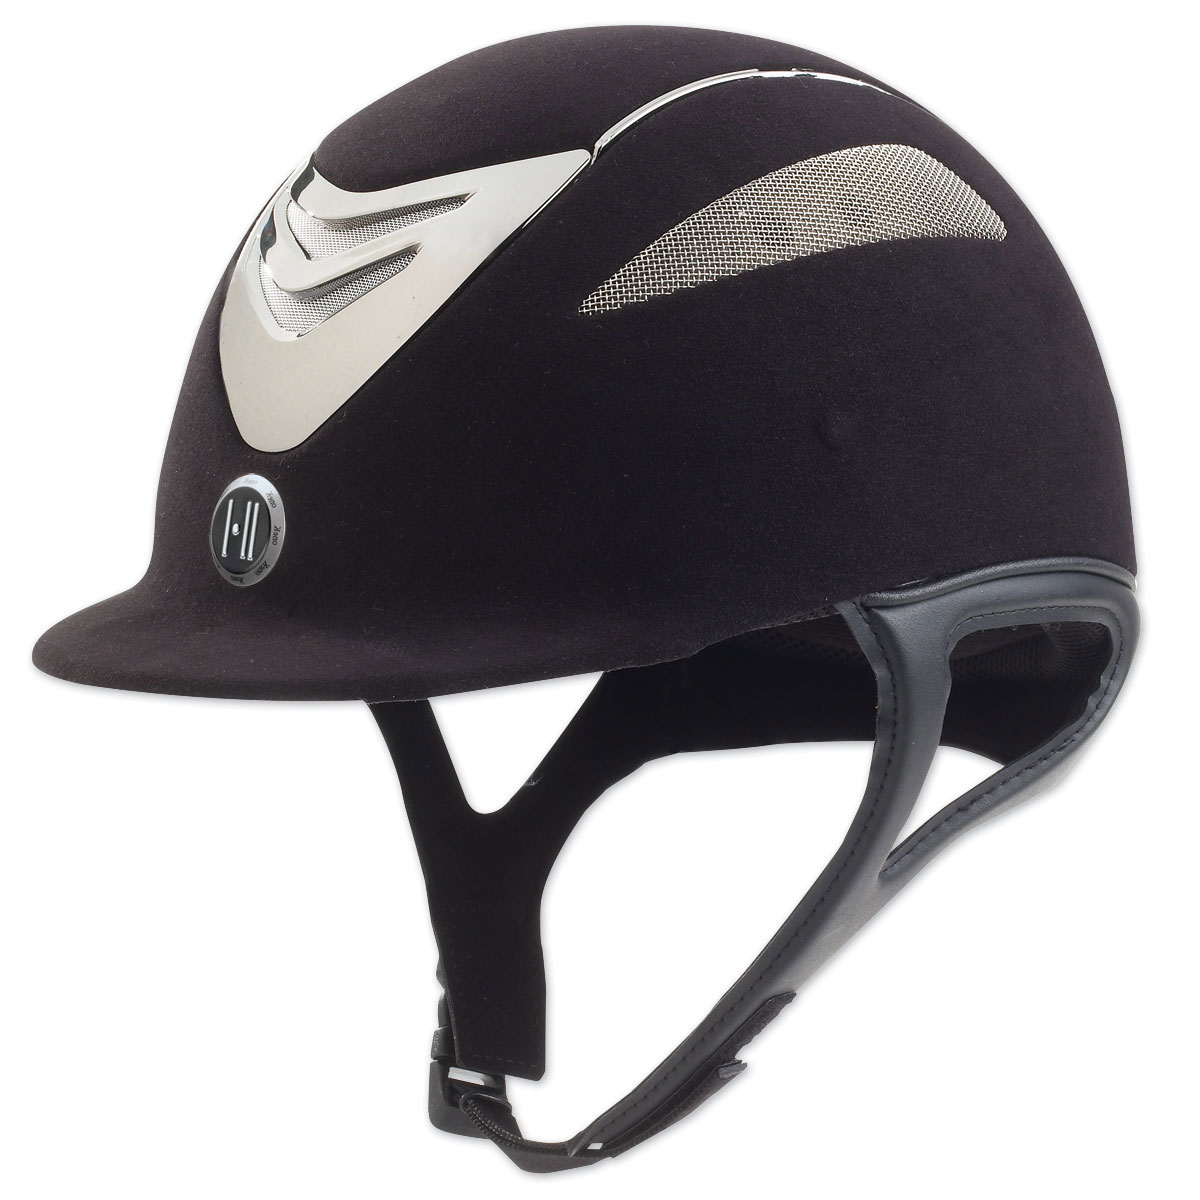 One K Defender Glamour Chrome Stripe Helmet CLOSEOUT 